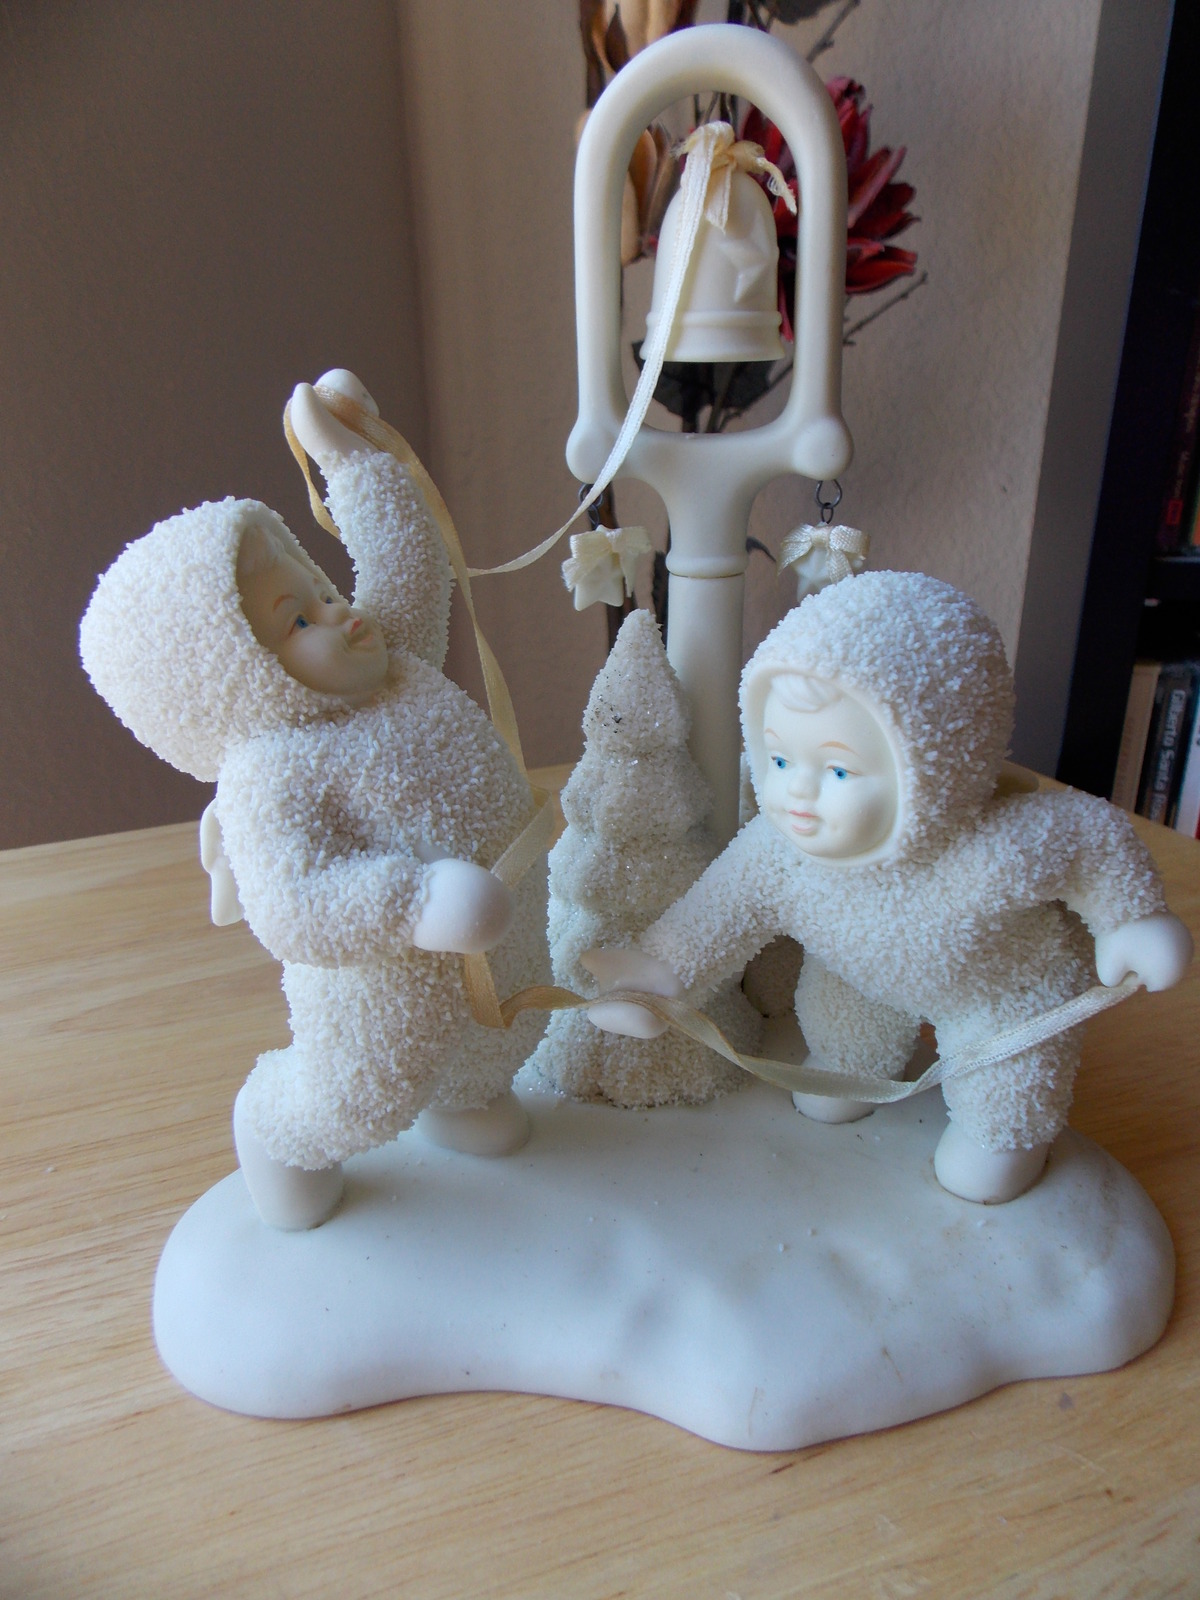 Dept. 56 1995 Snowbabies Retired “Ring The Bells…It’s Christmas” Figurine  - $50.00